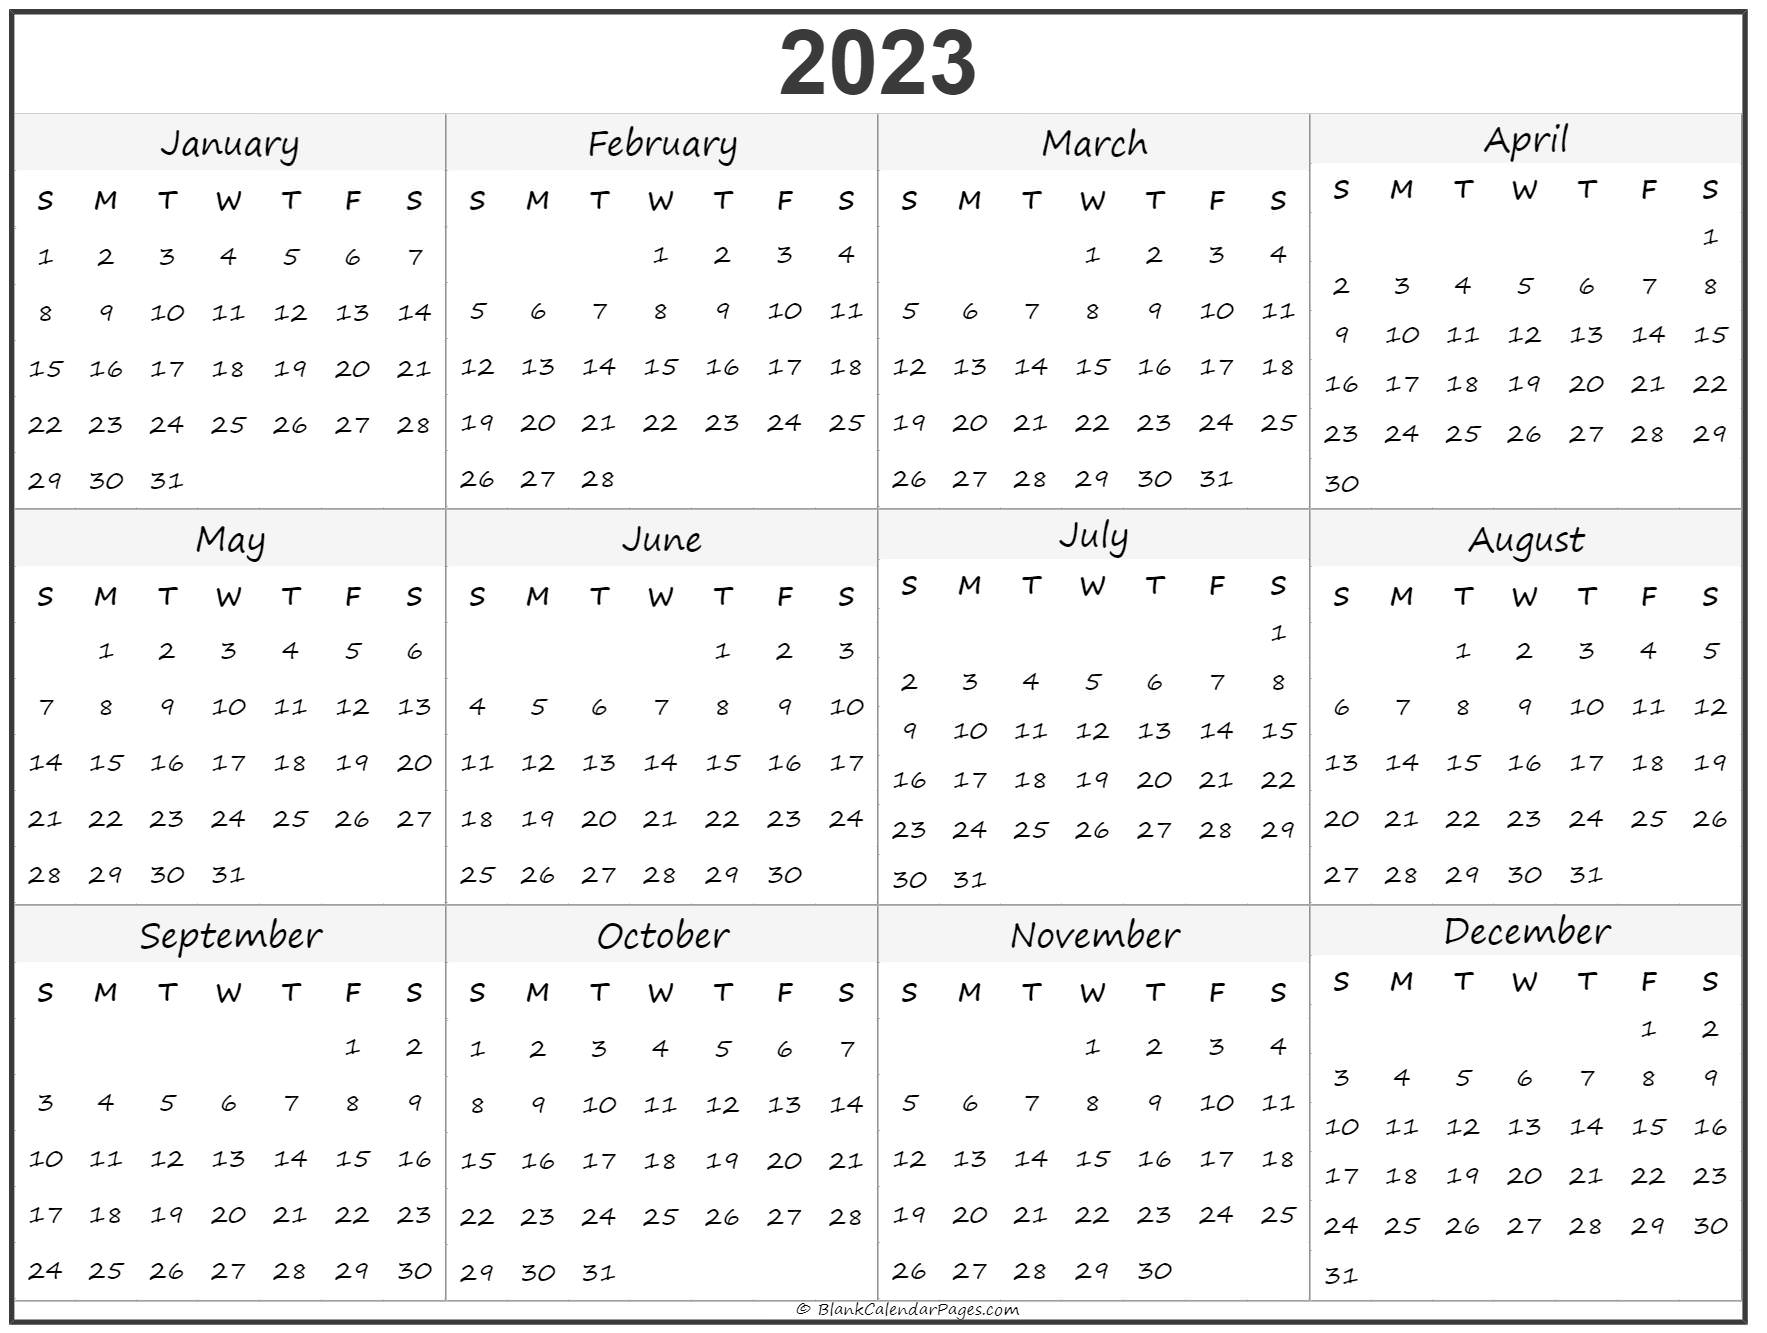 2023 Calendar Pdf Word Excel 2023 Calendar Templates And Images 2023 Printable Calendar